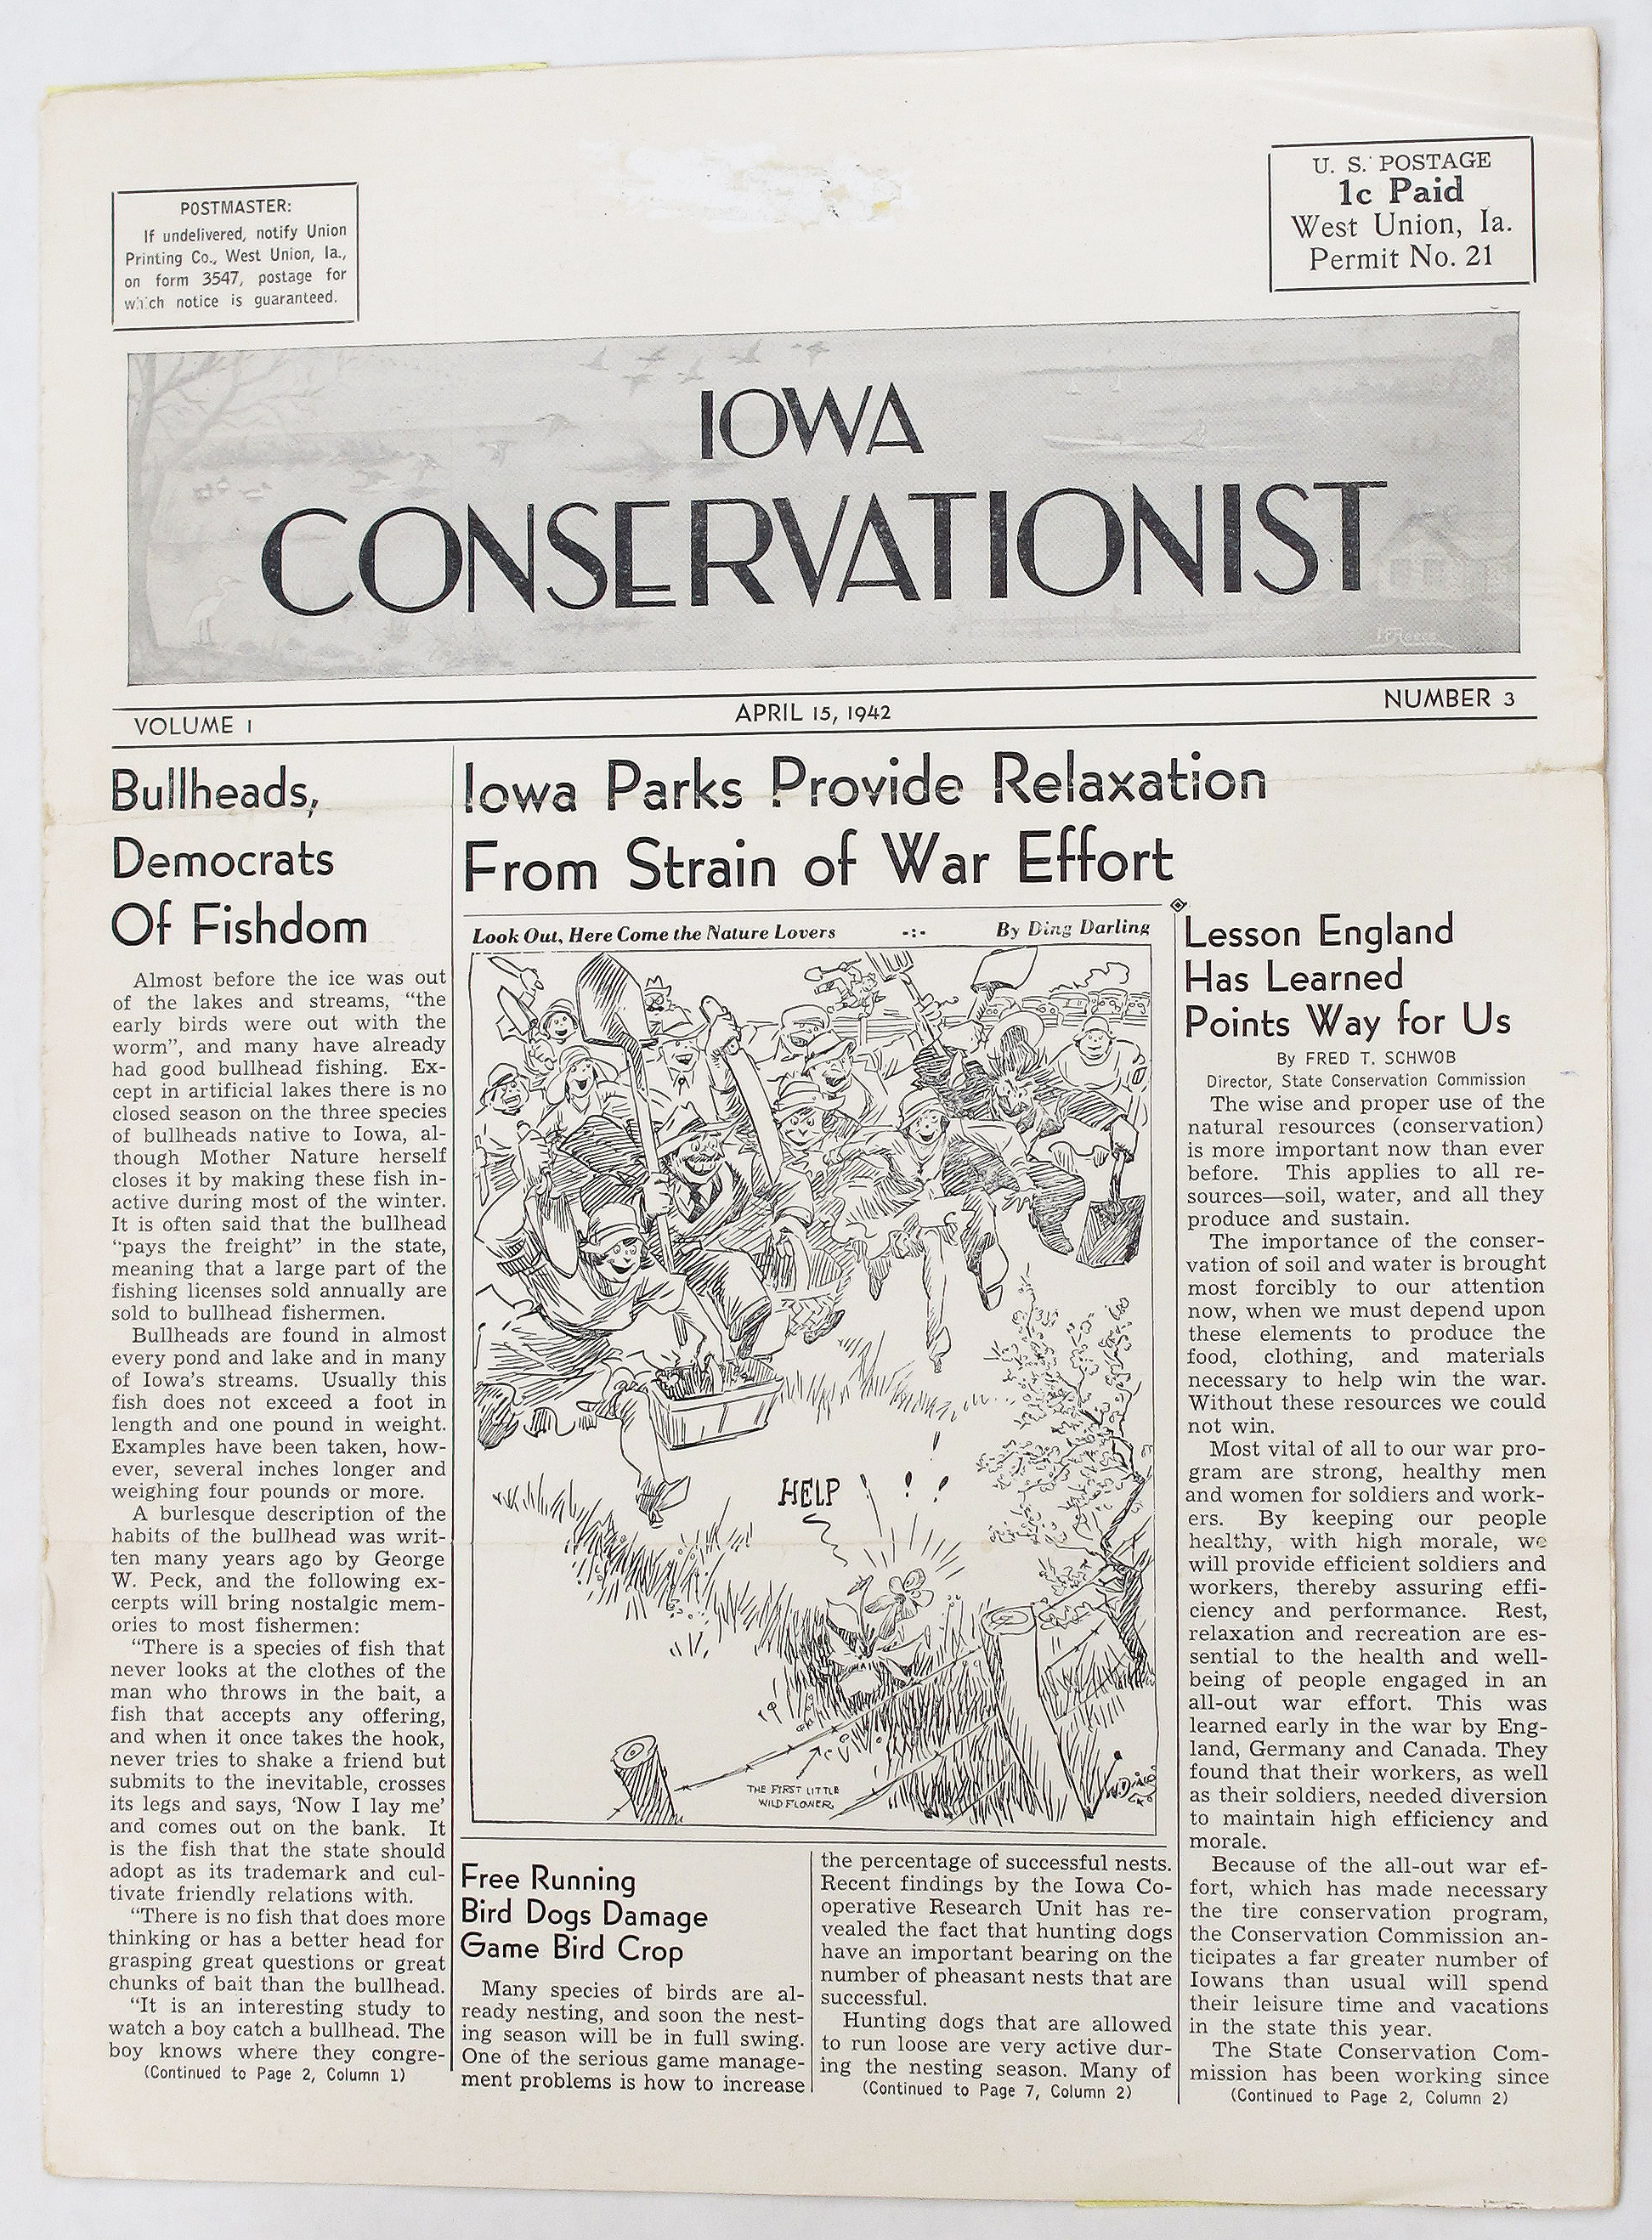 April 15, 1942 edition of the Iowa Conservationist (now Iowa Outdoors magazine) | Iowa DNR